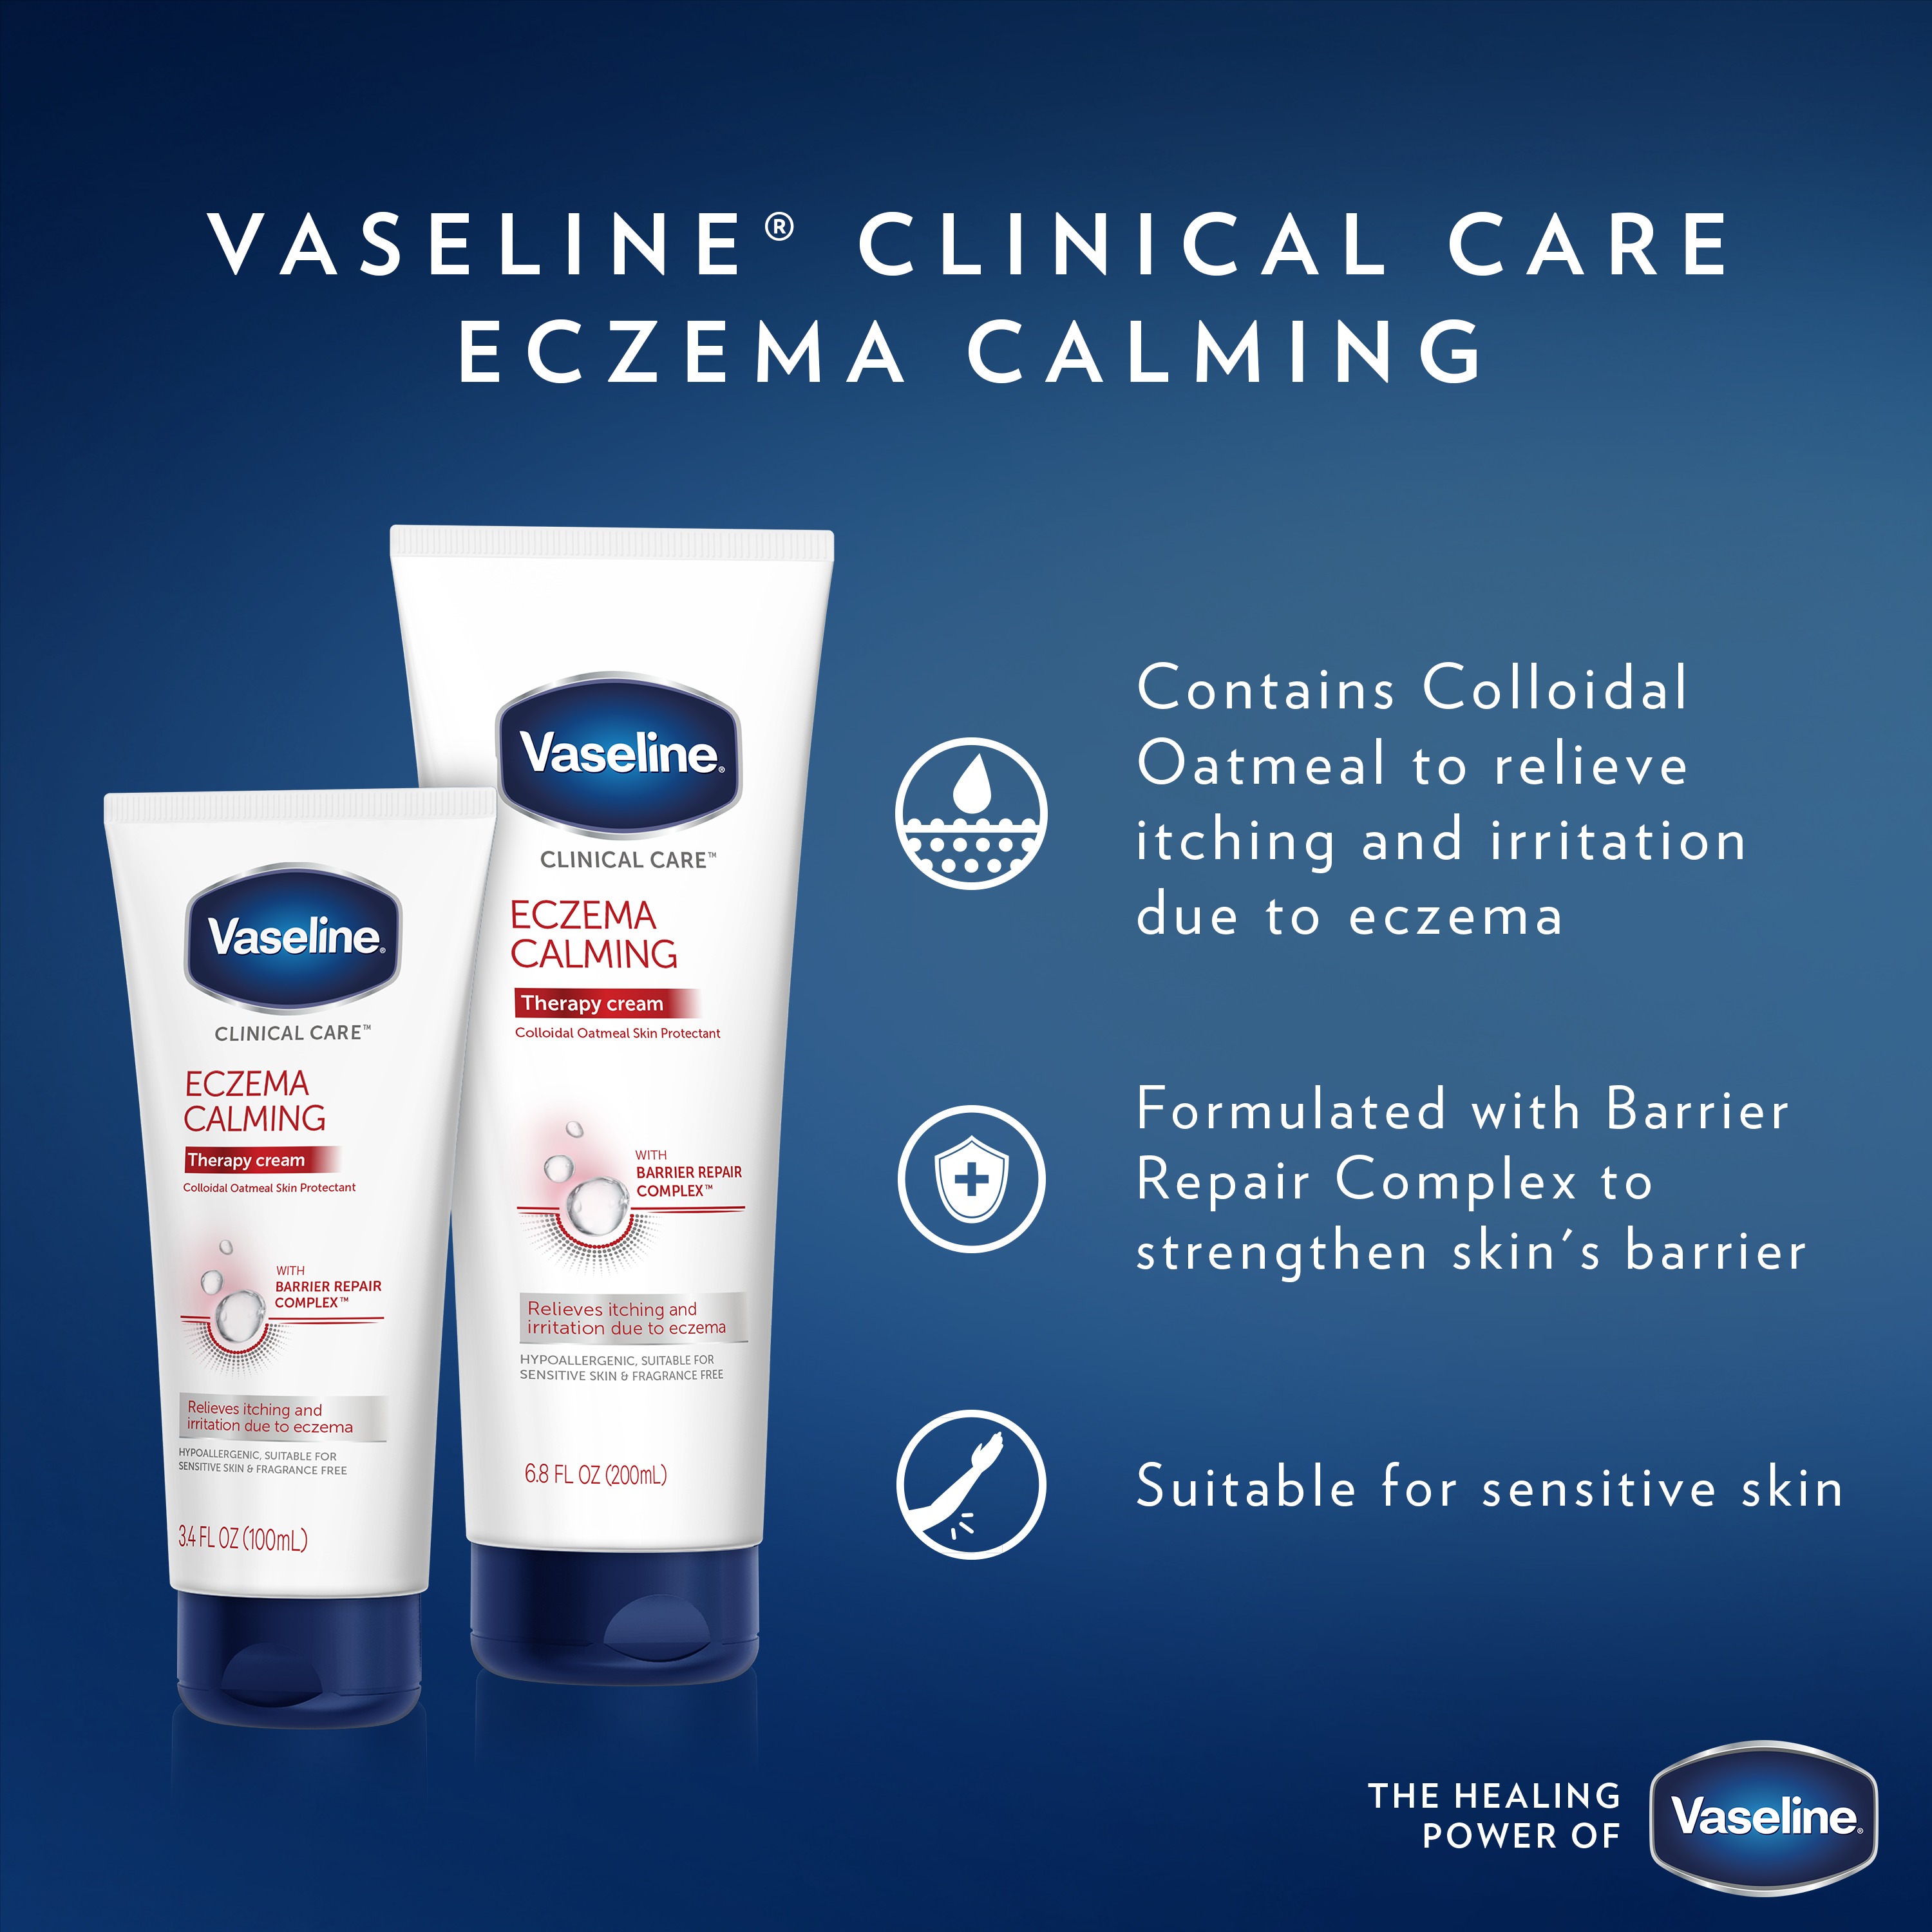 Vaseline Clinical Care Eczema Calming Body Cream, 6.8 oz - image 4 of 16